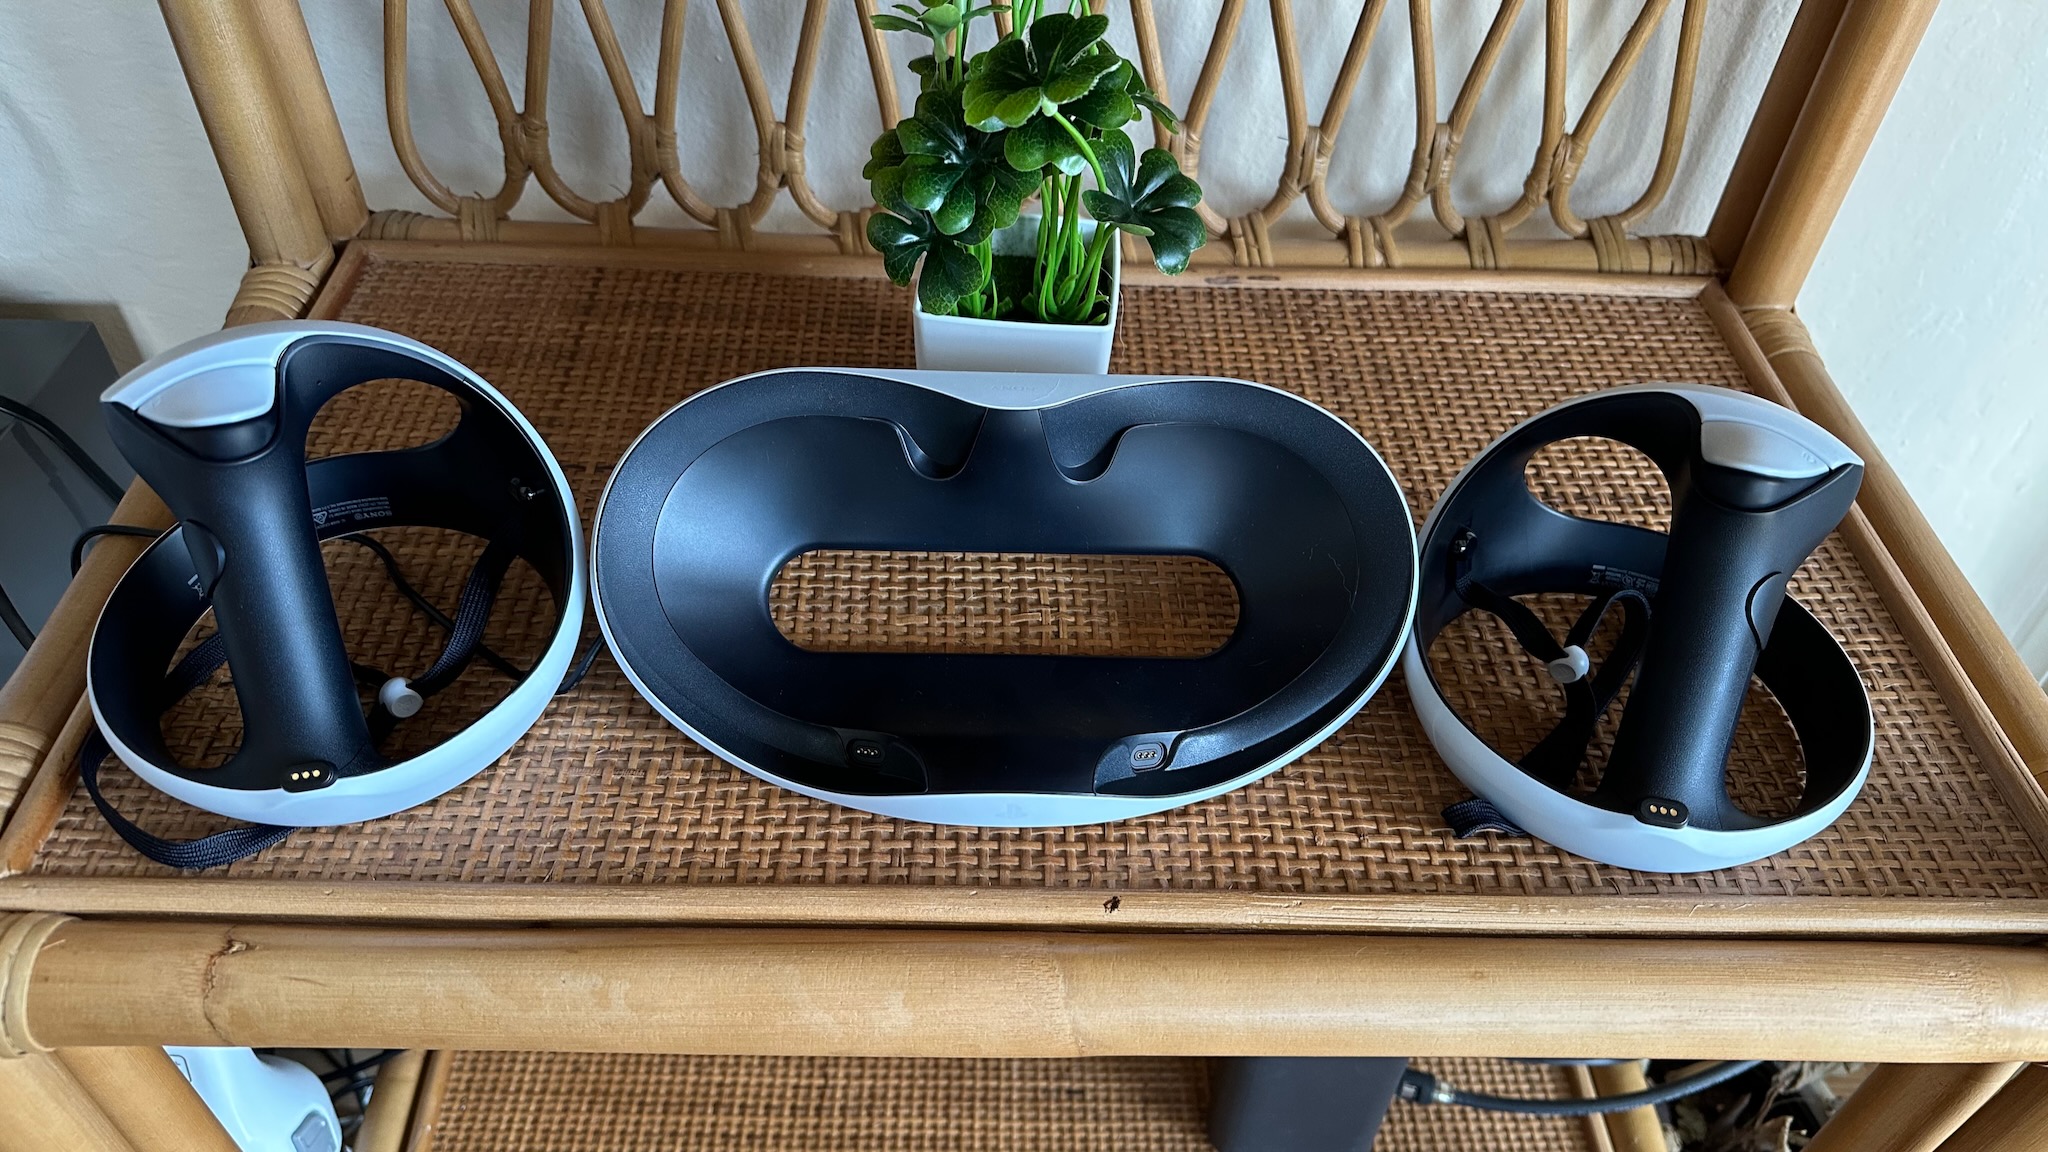 Buy PS VR2 Sense Controller Charging Station